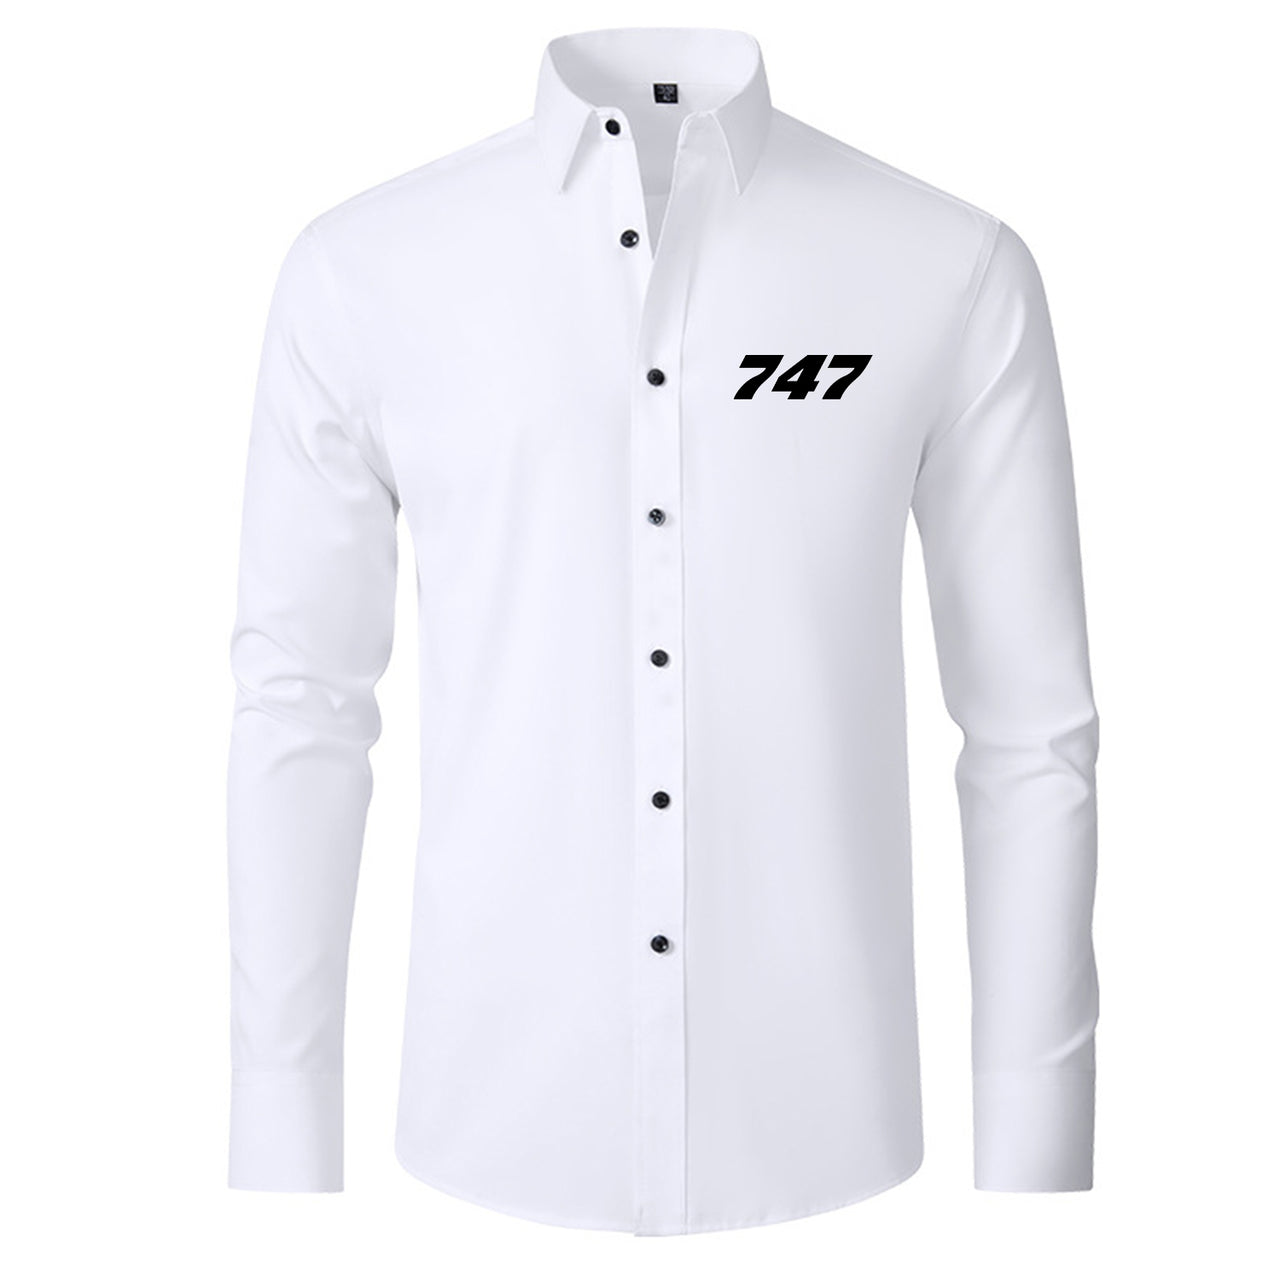 747 Flat Text Designed Long Sleeve Shirts